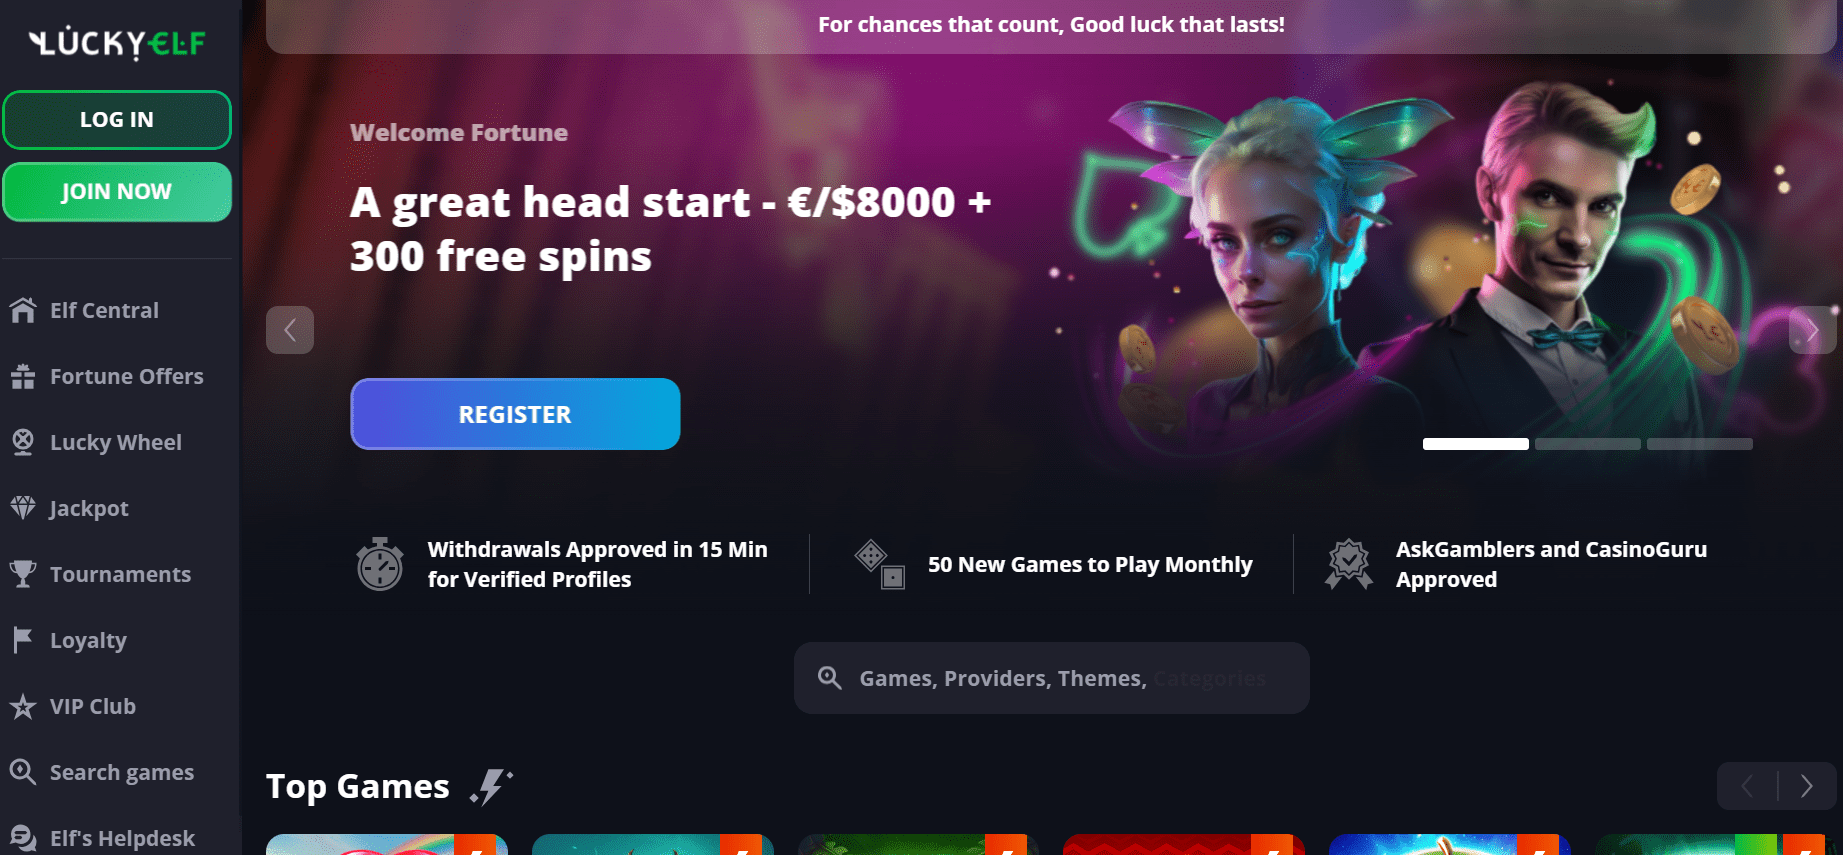 Lucky elf bonus casino free spins